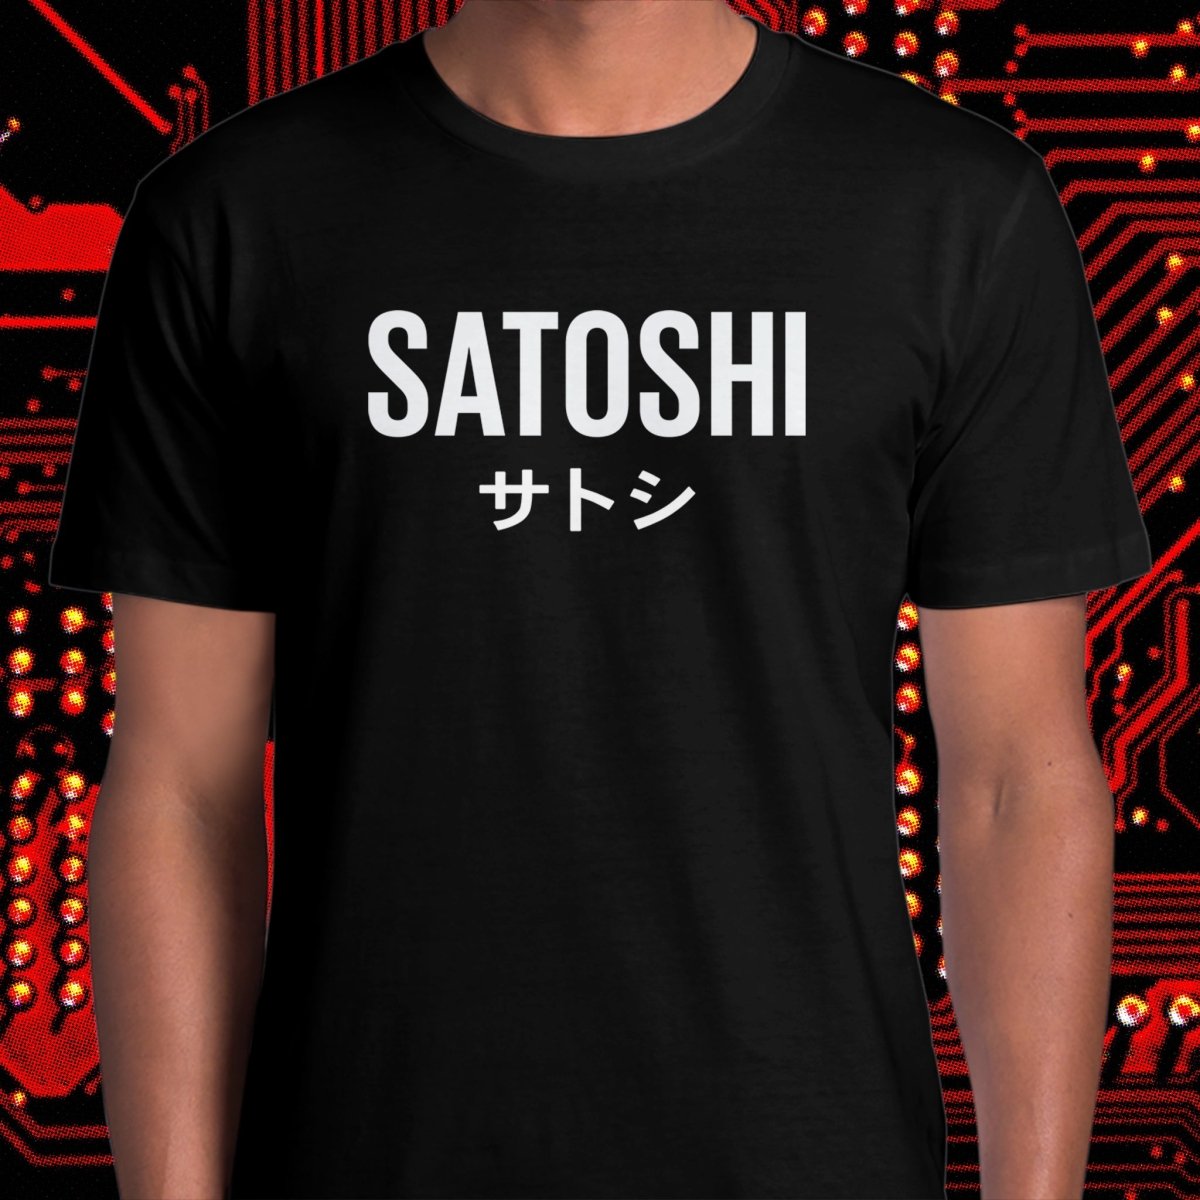 Bitcoin Merch - Satoshi T-Shirt model image (front view). 